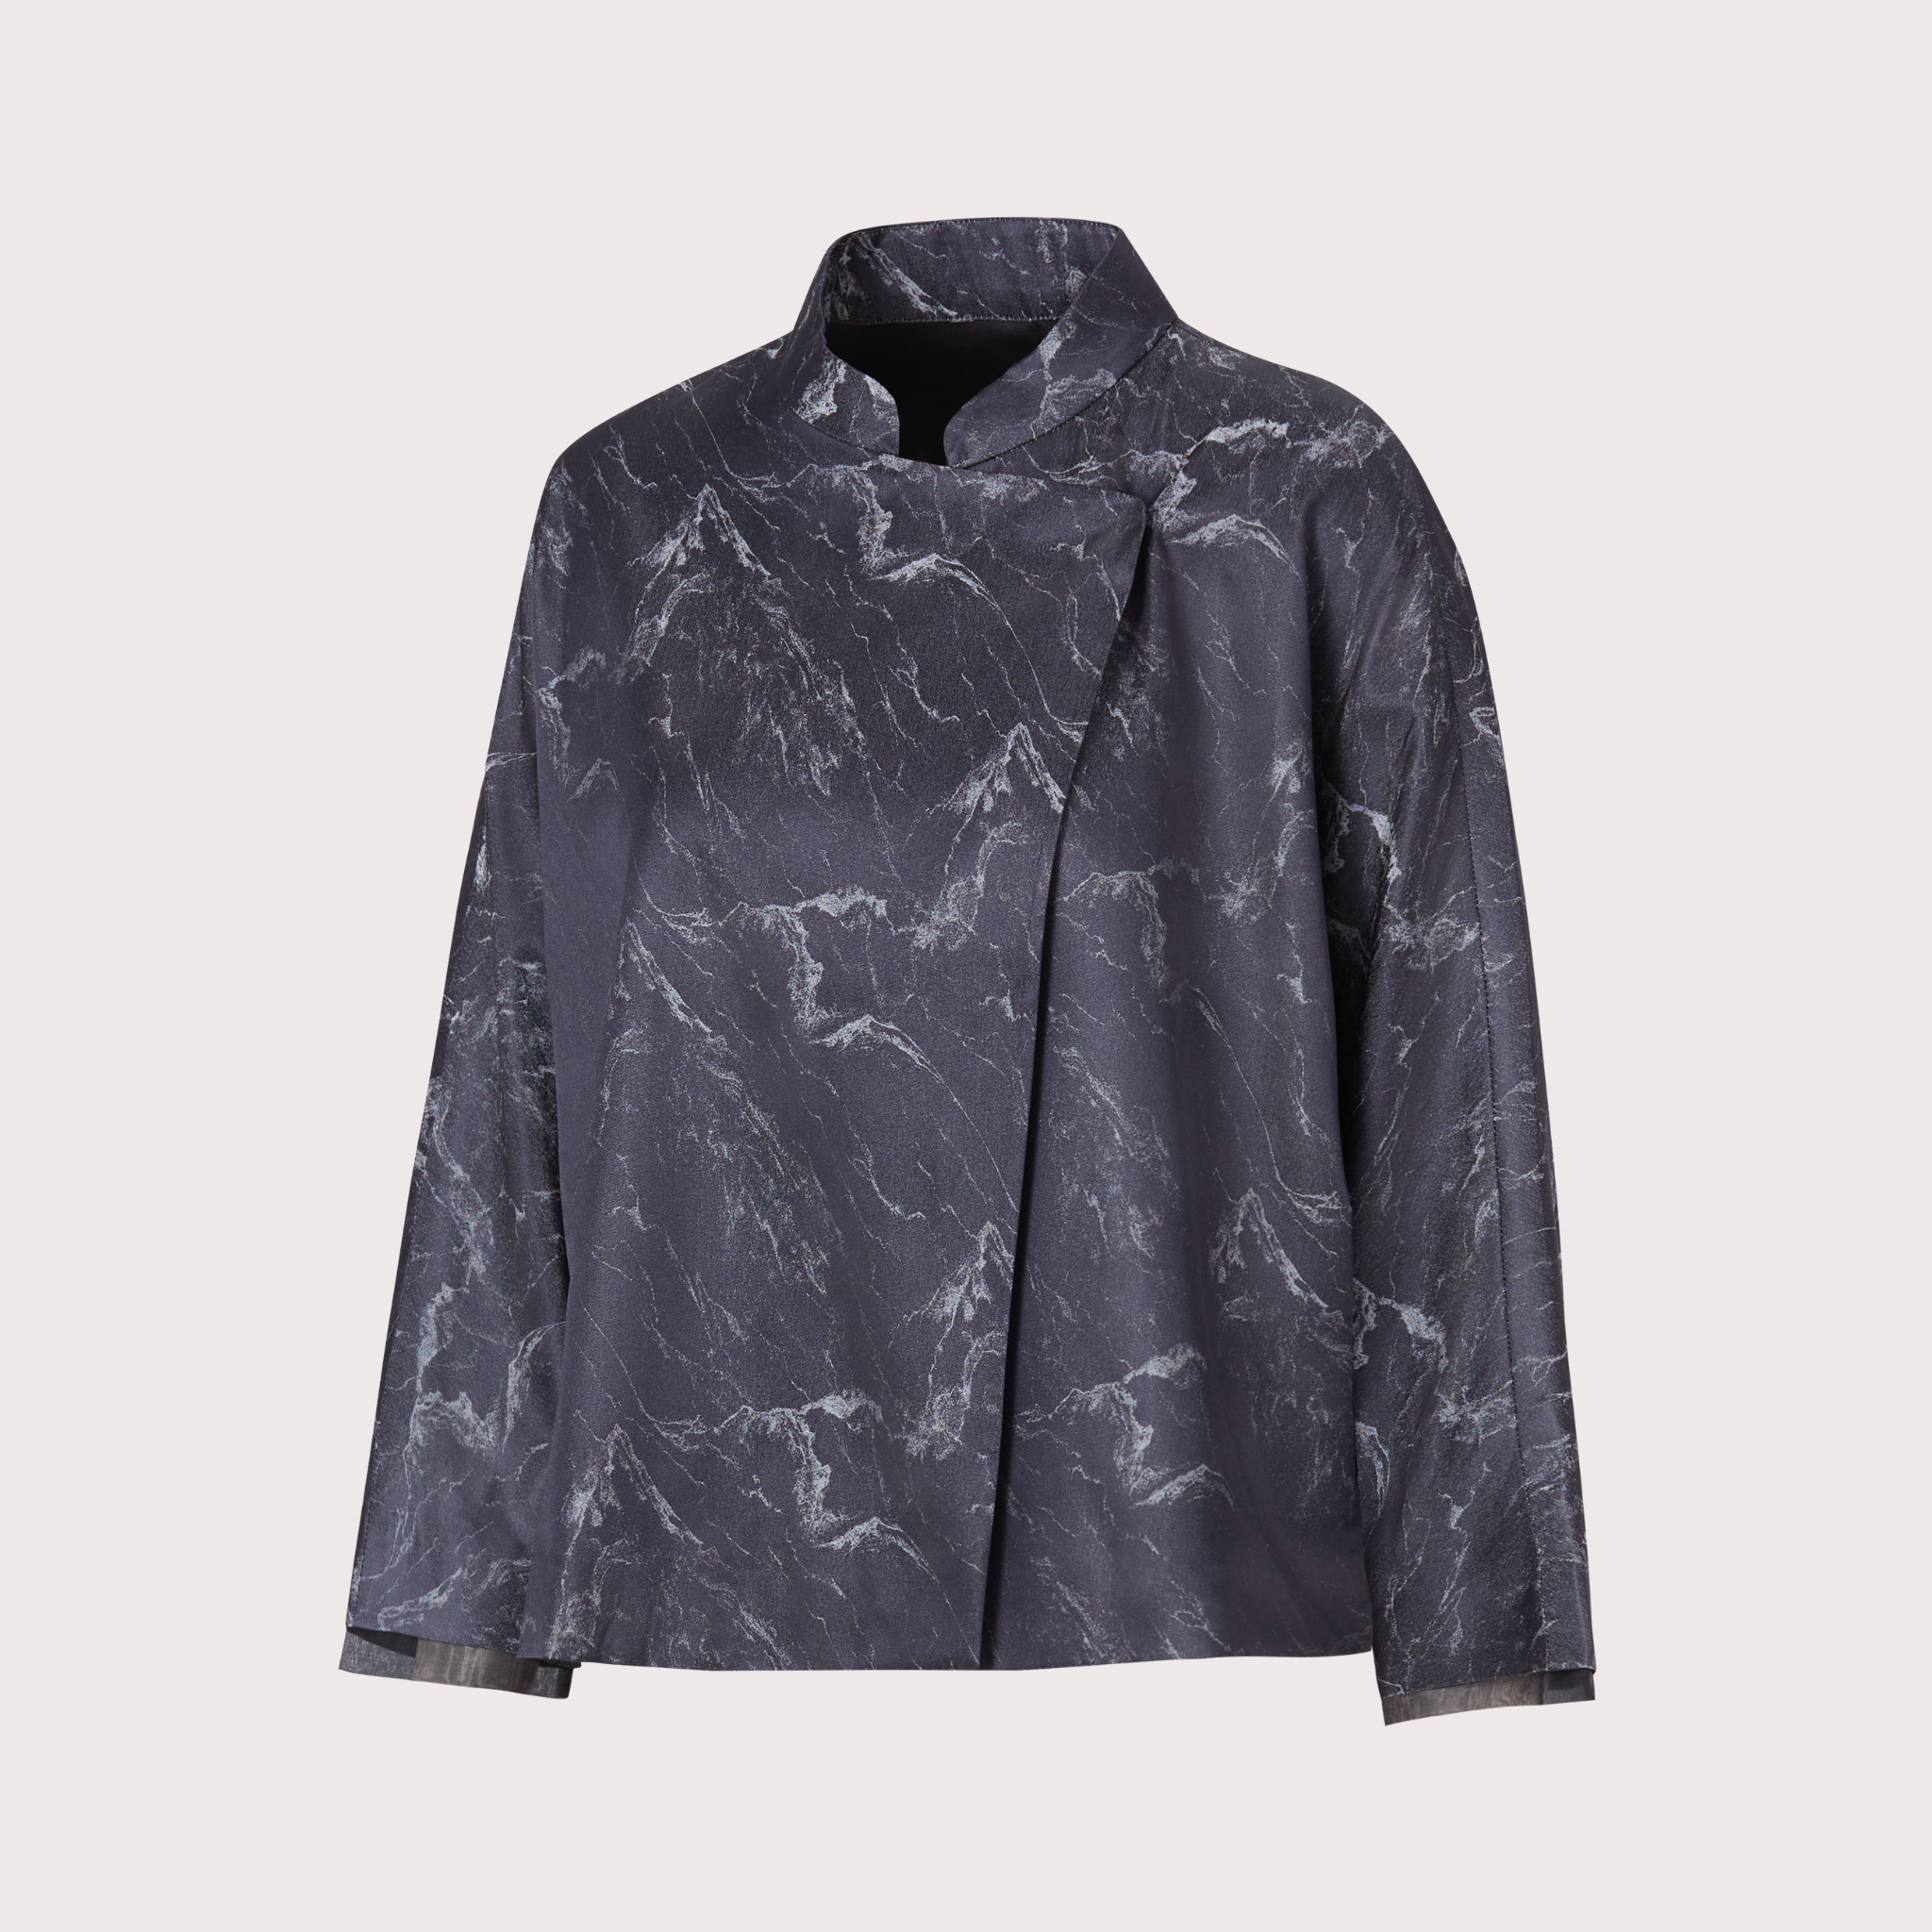 a black silk jacket on grey background